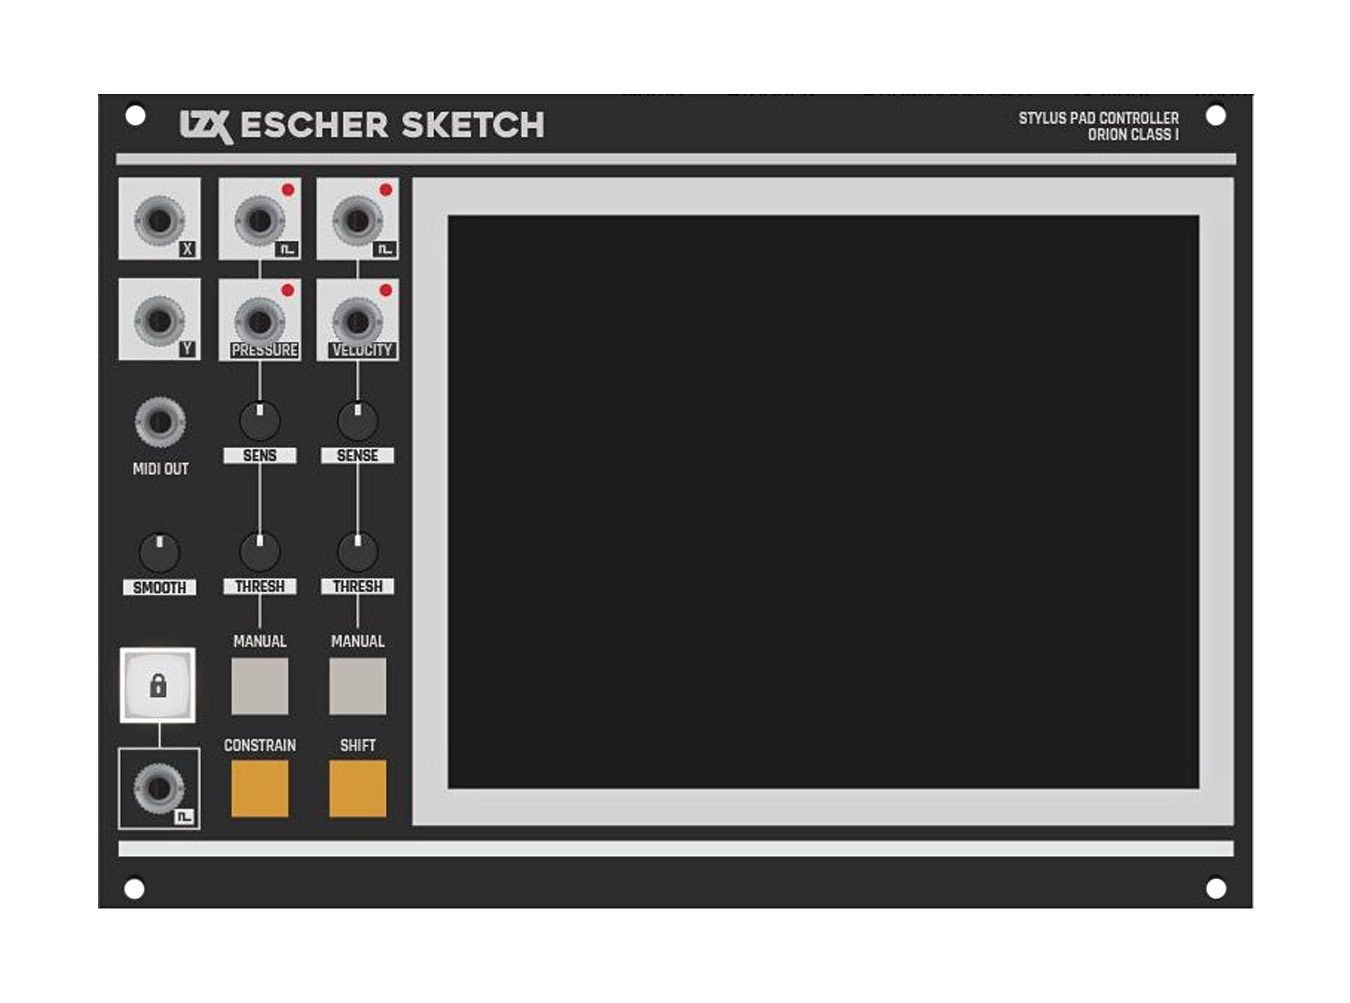 LZX Industries Escher Sketch Stylus Pad Controller